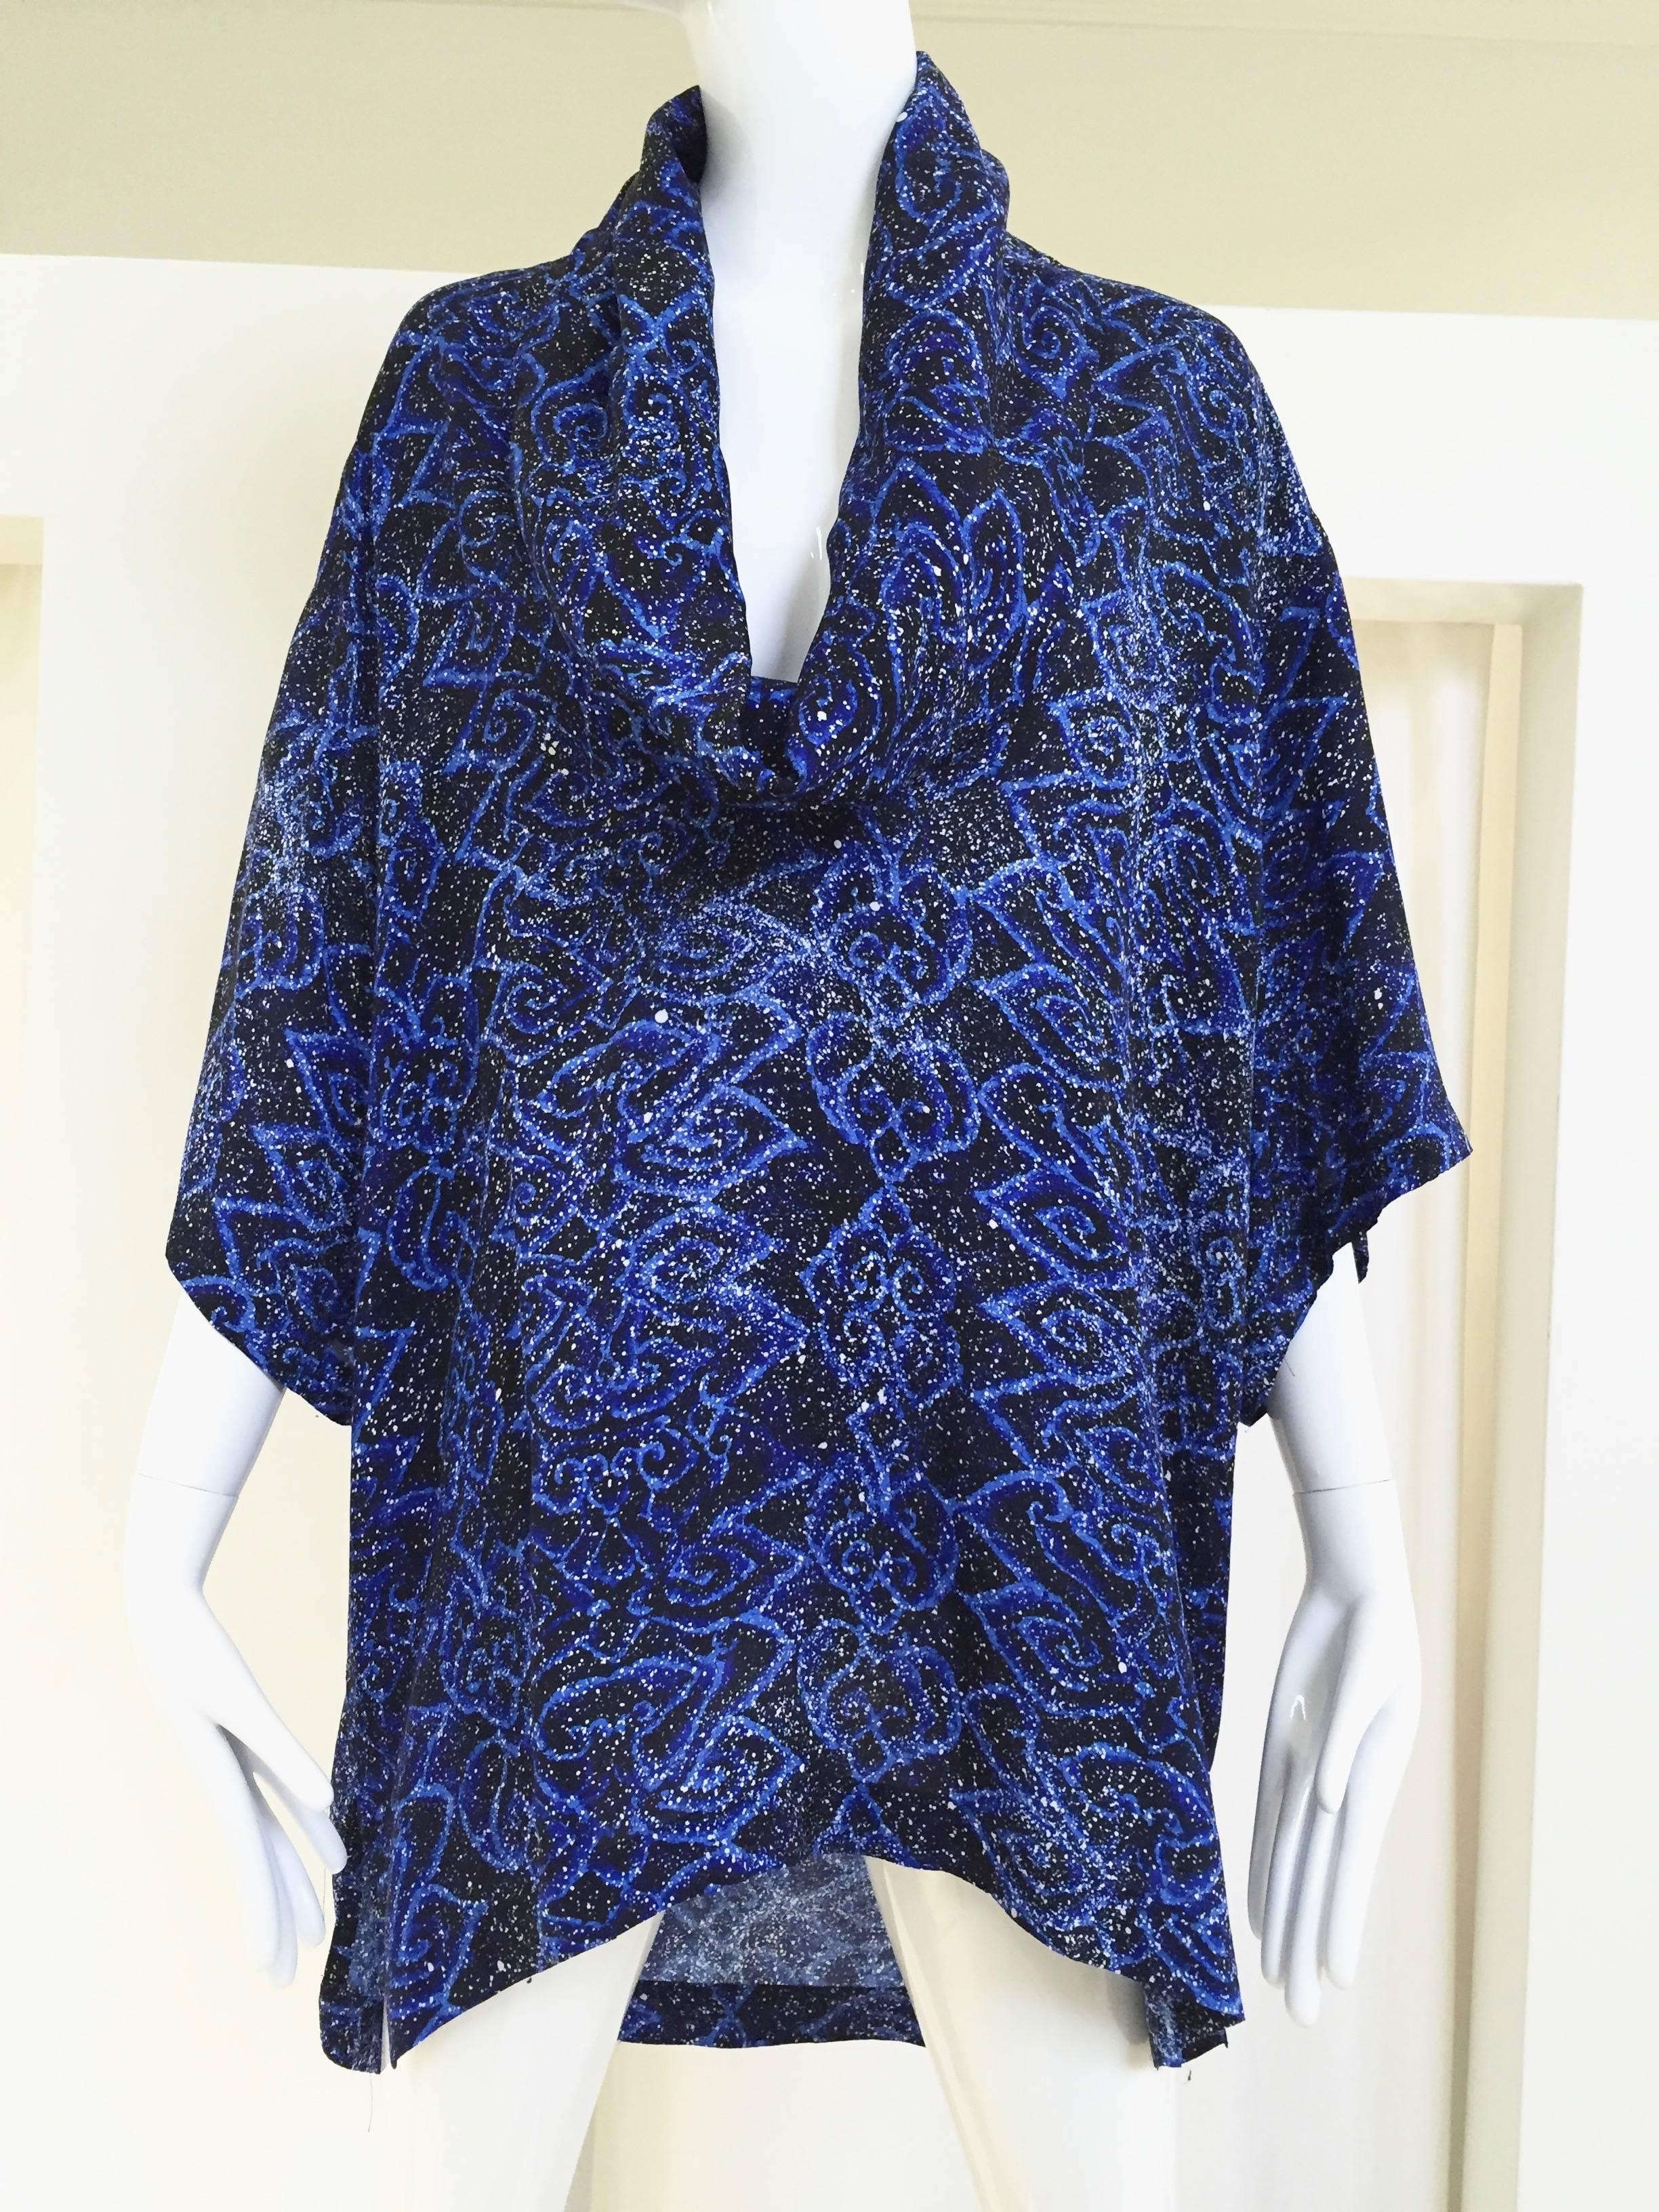 80s Yohji Yamamoto blue and white print cowl neck oversize blouse.
fit size; 2/4/6/8
Bust:  50